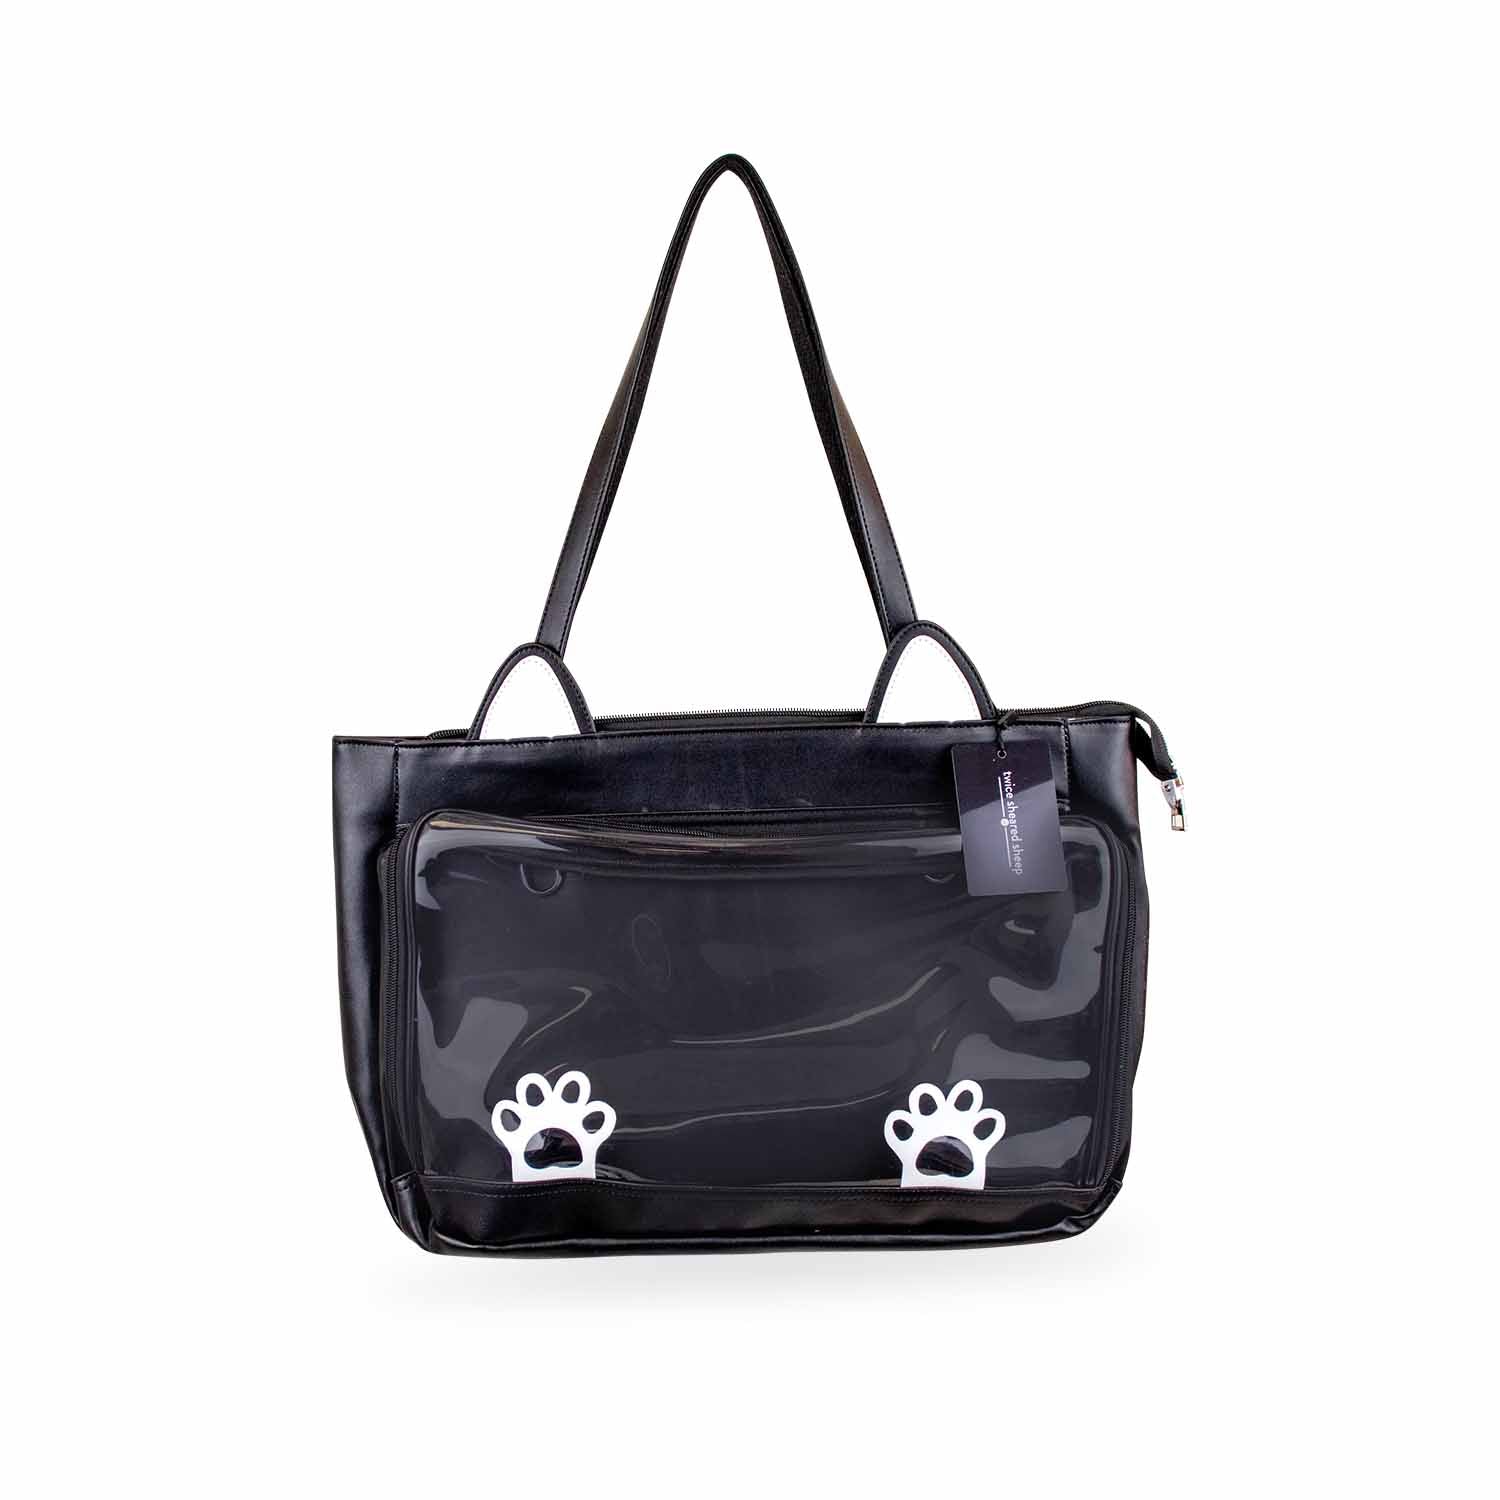 Kitty Cat Vegan Leather Knitting Project Bag - Large Ita Tote Bag - Black